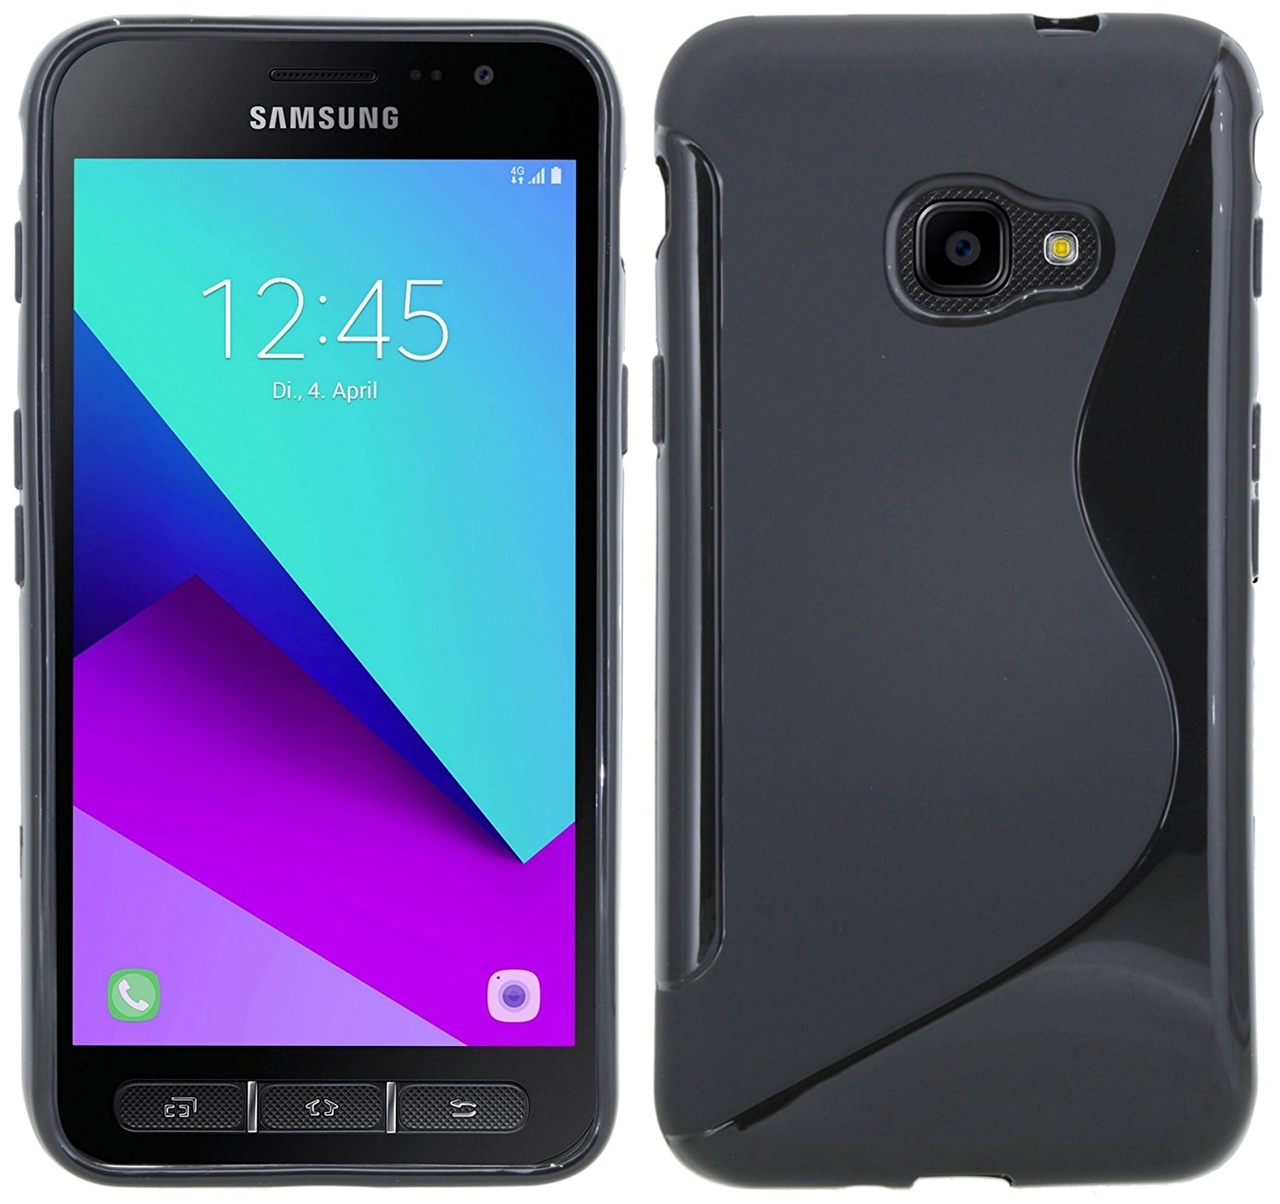 onstabiel media kraai Samsung Galaxy Xcover 4s Zwart S-line TPU siliconen case hoesje -  Telecomhuis.nl